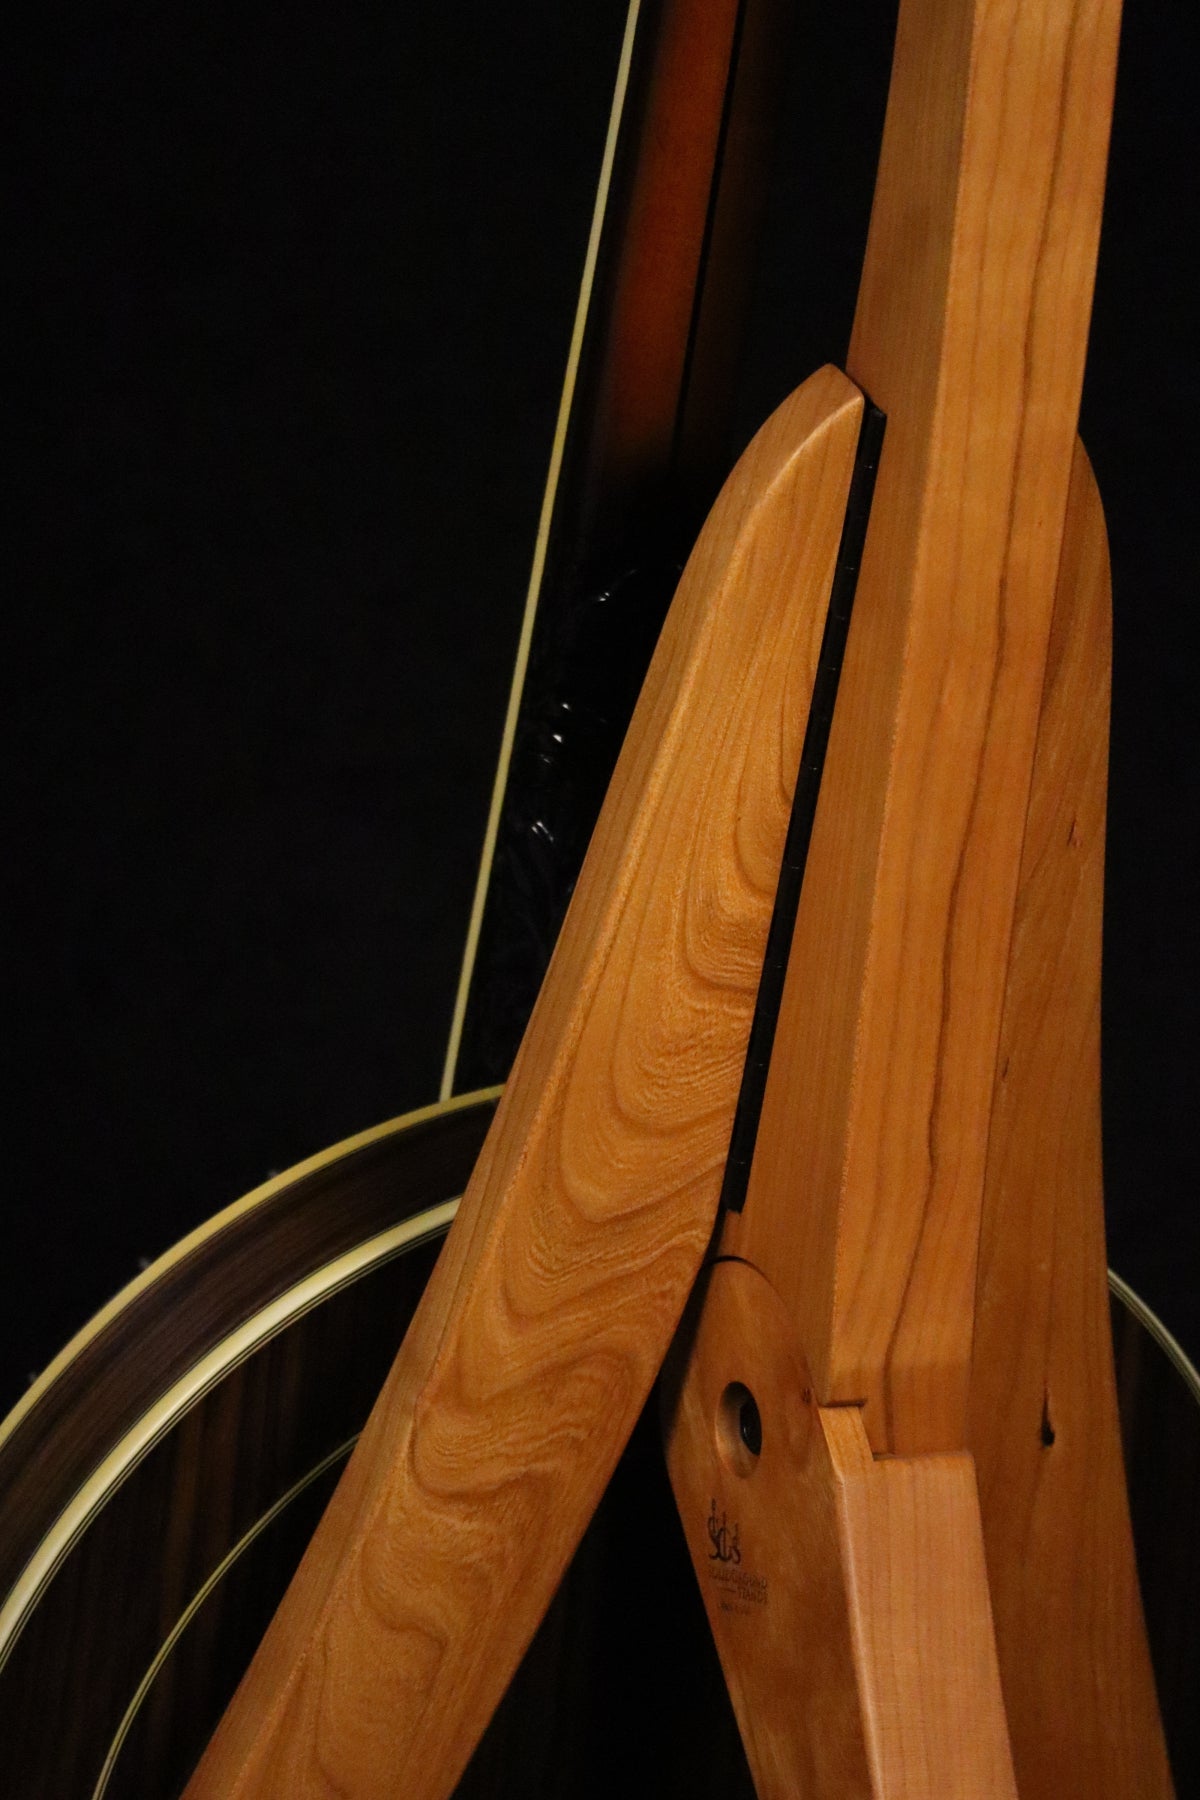 Folding cherry wood banjo floor stand closeup rear image with Alvarez banjo